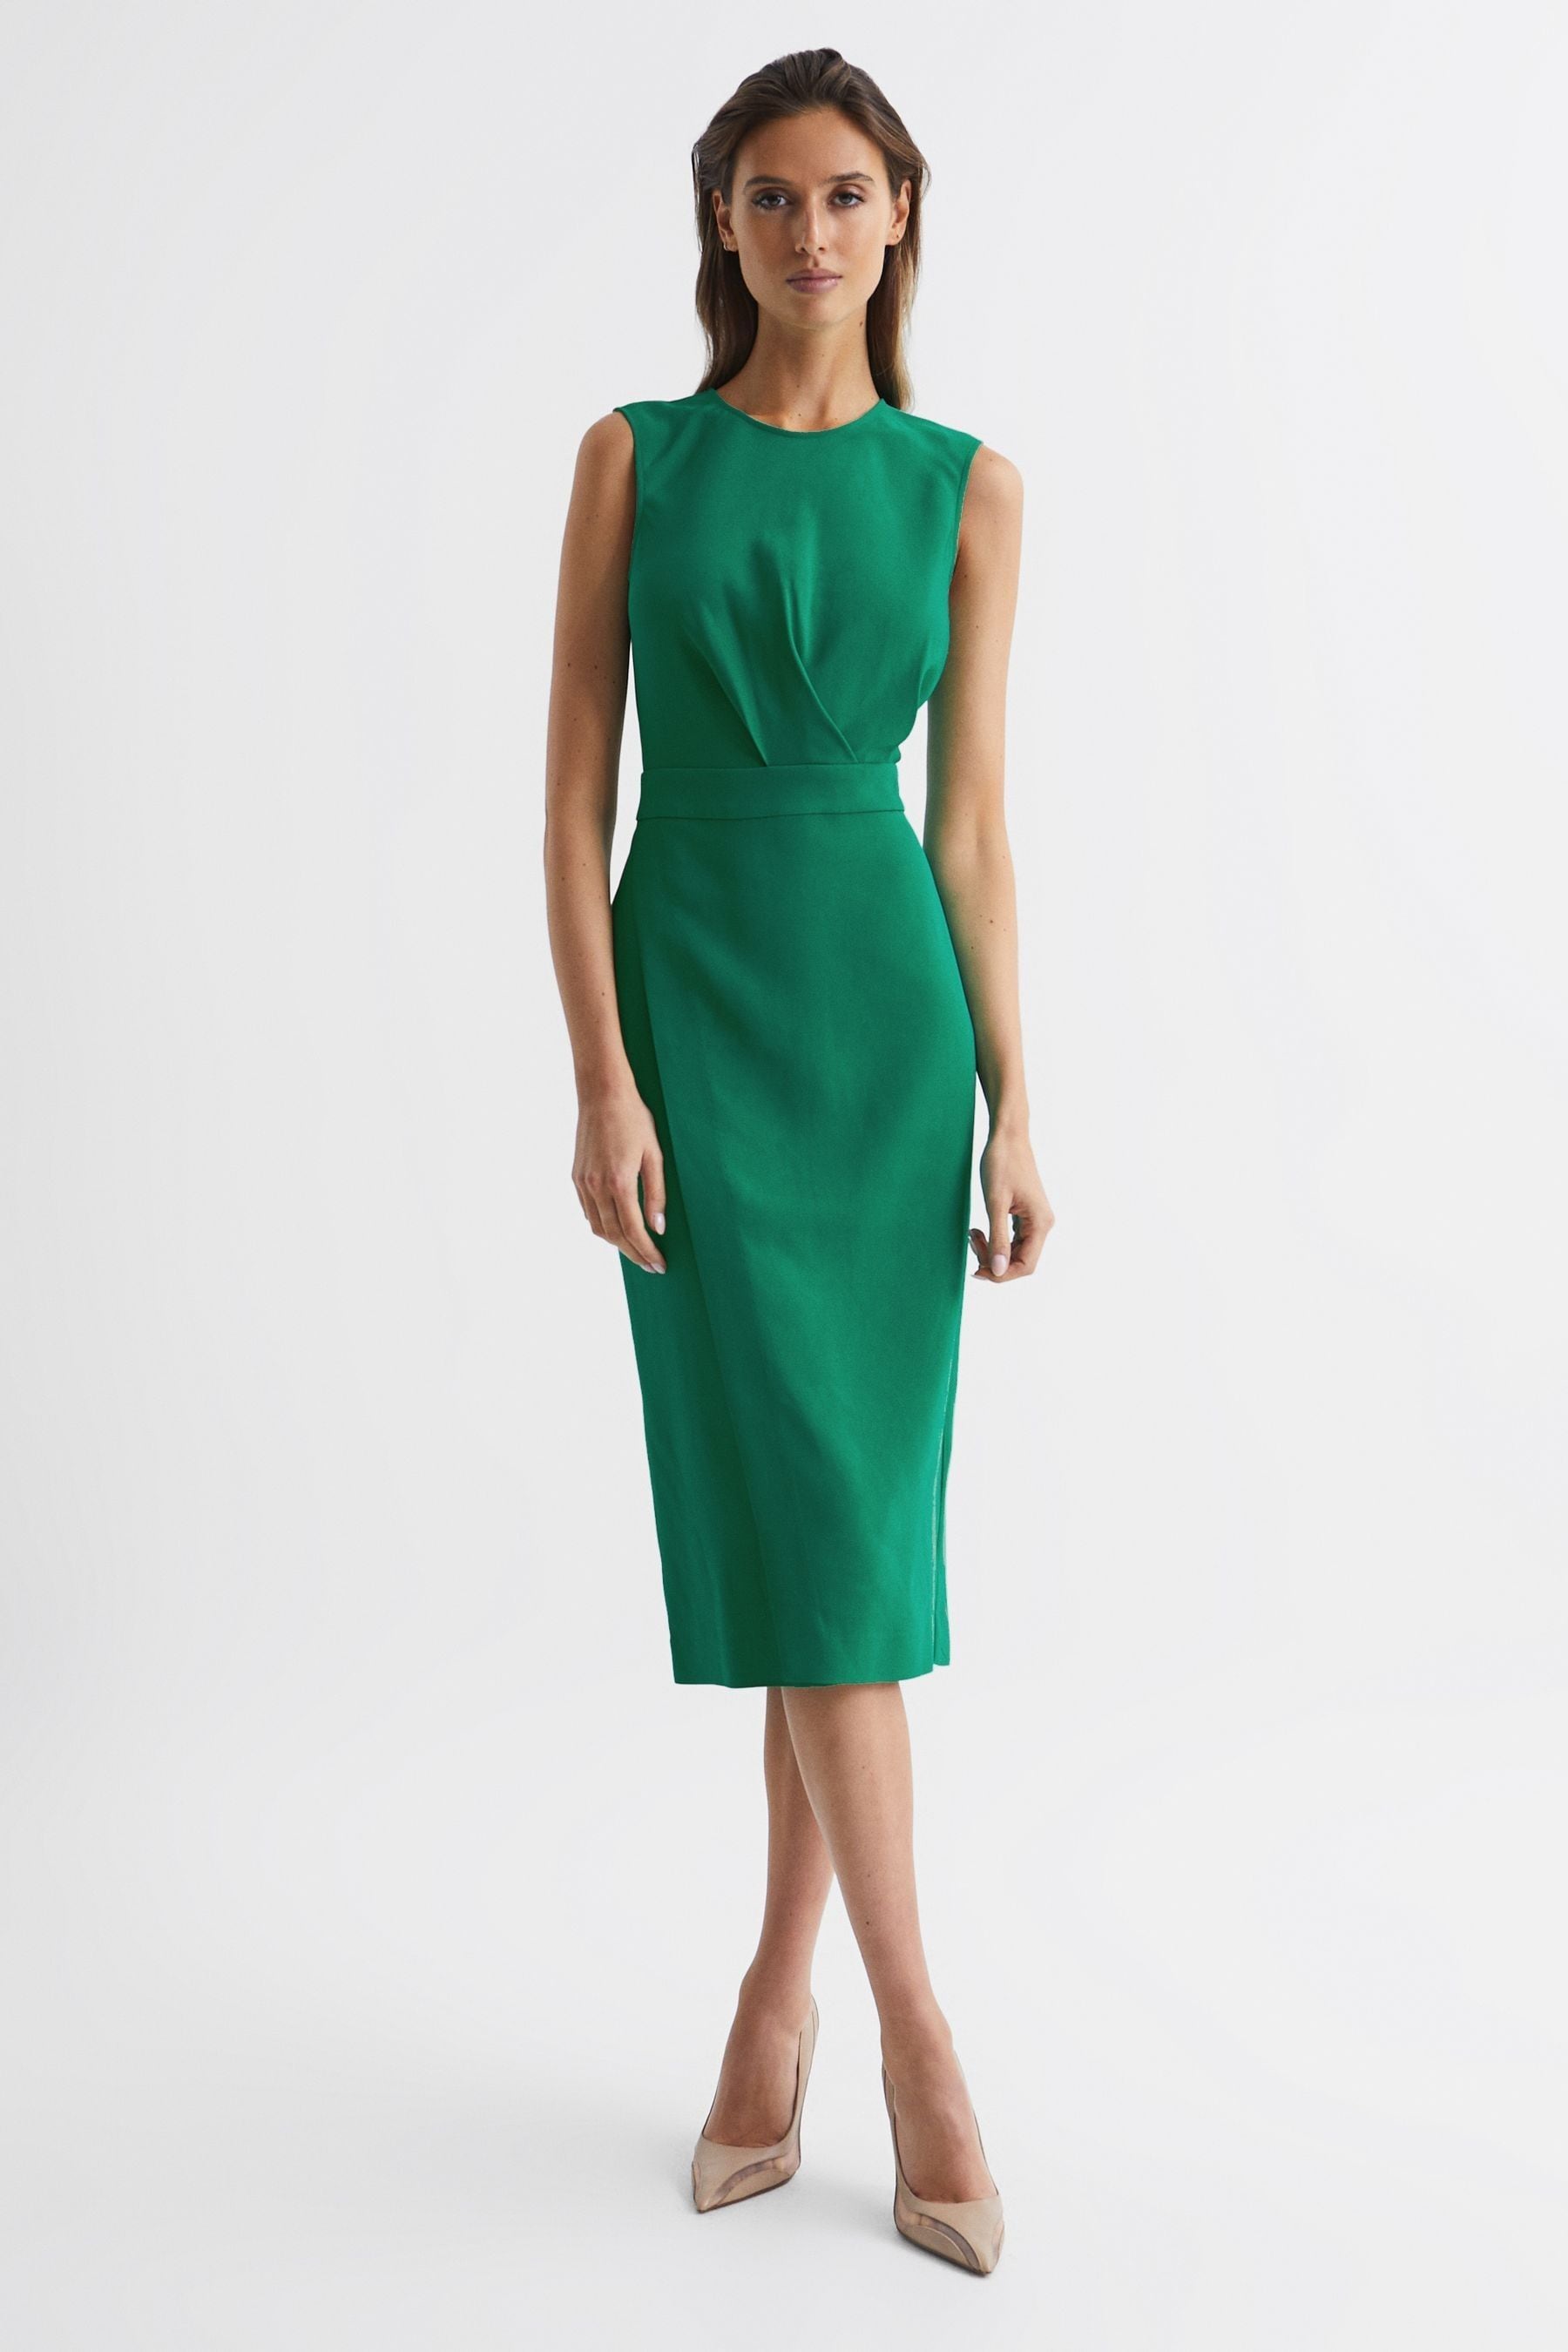 Reiss Layla - Green Sleeveless Bodycon Dress, Us 8